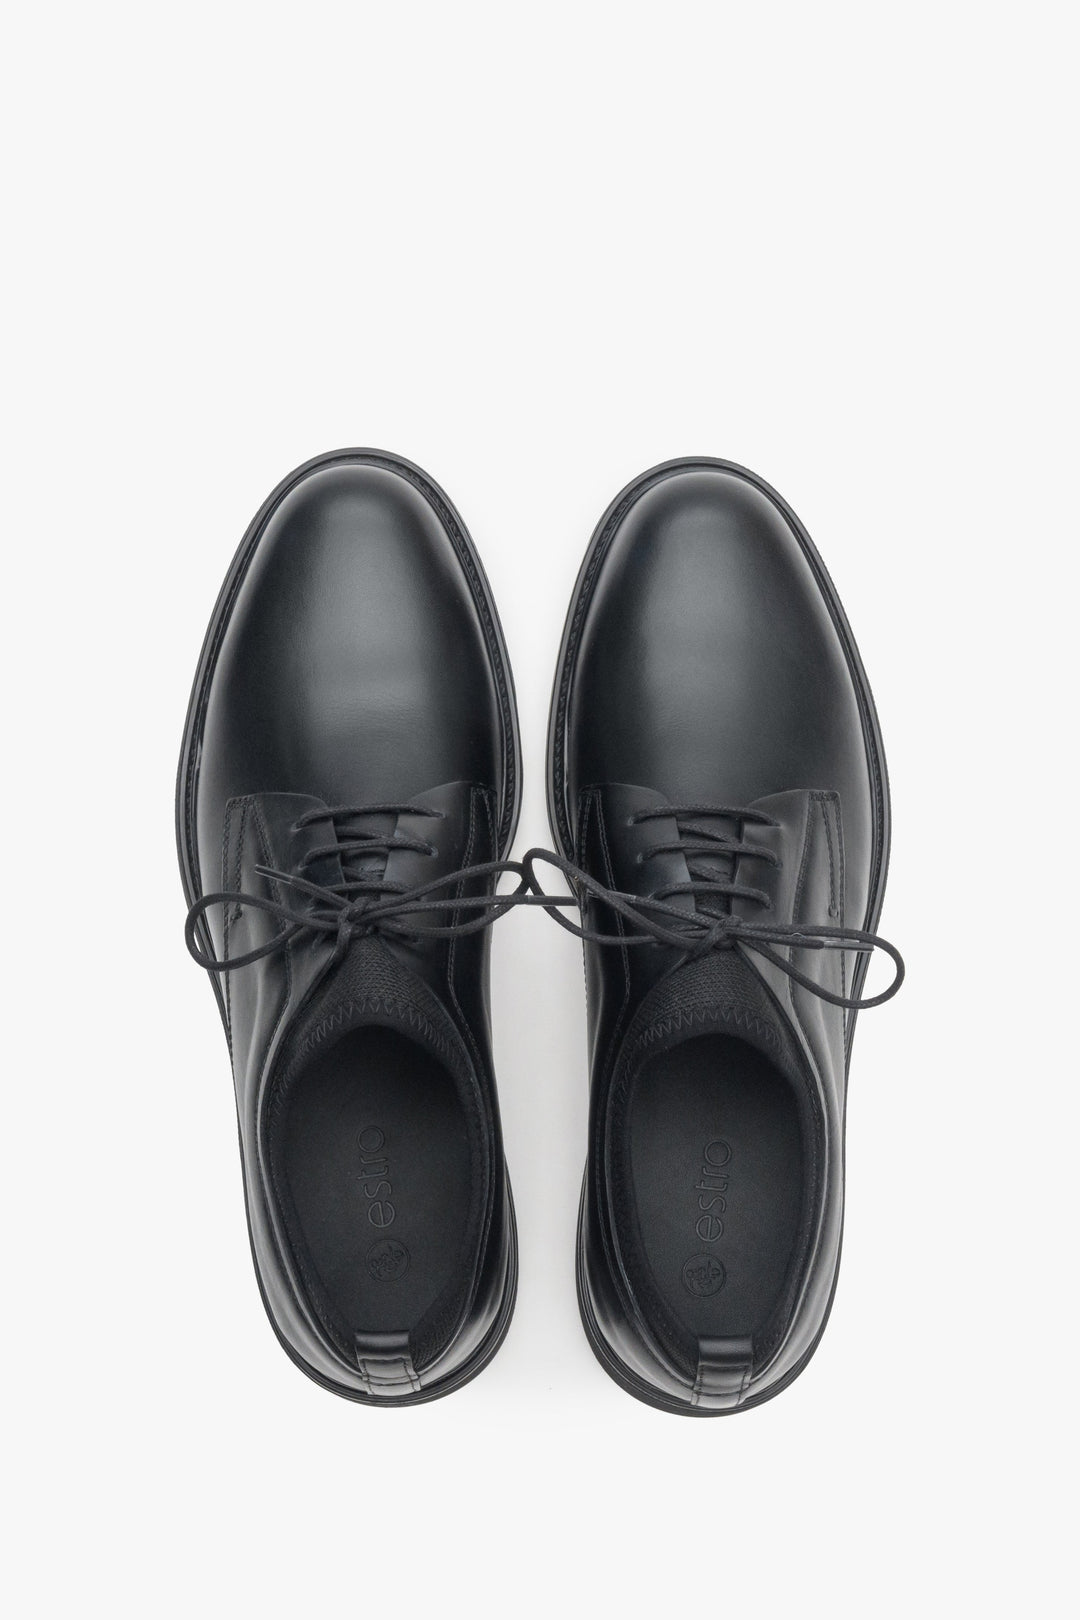 Men's leather lace-up shoes by Estro - top view presentation.